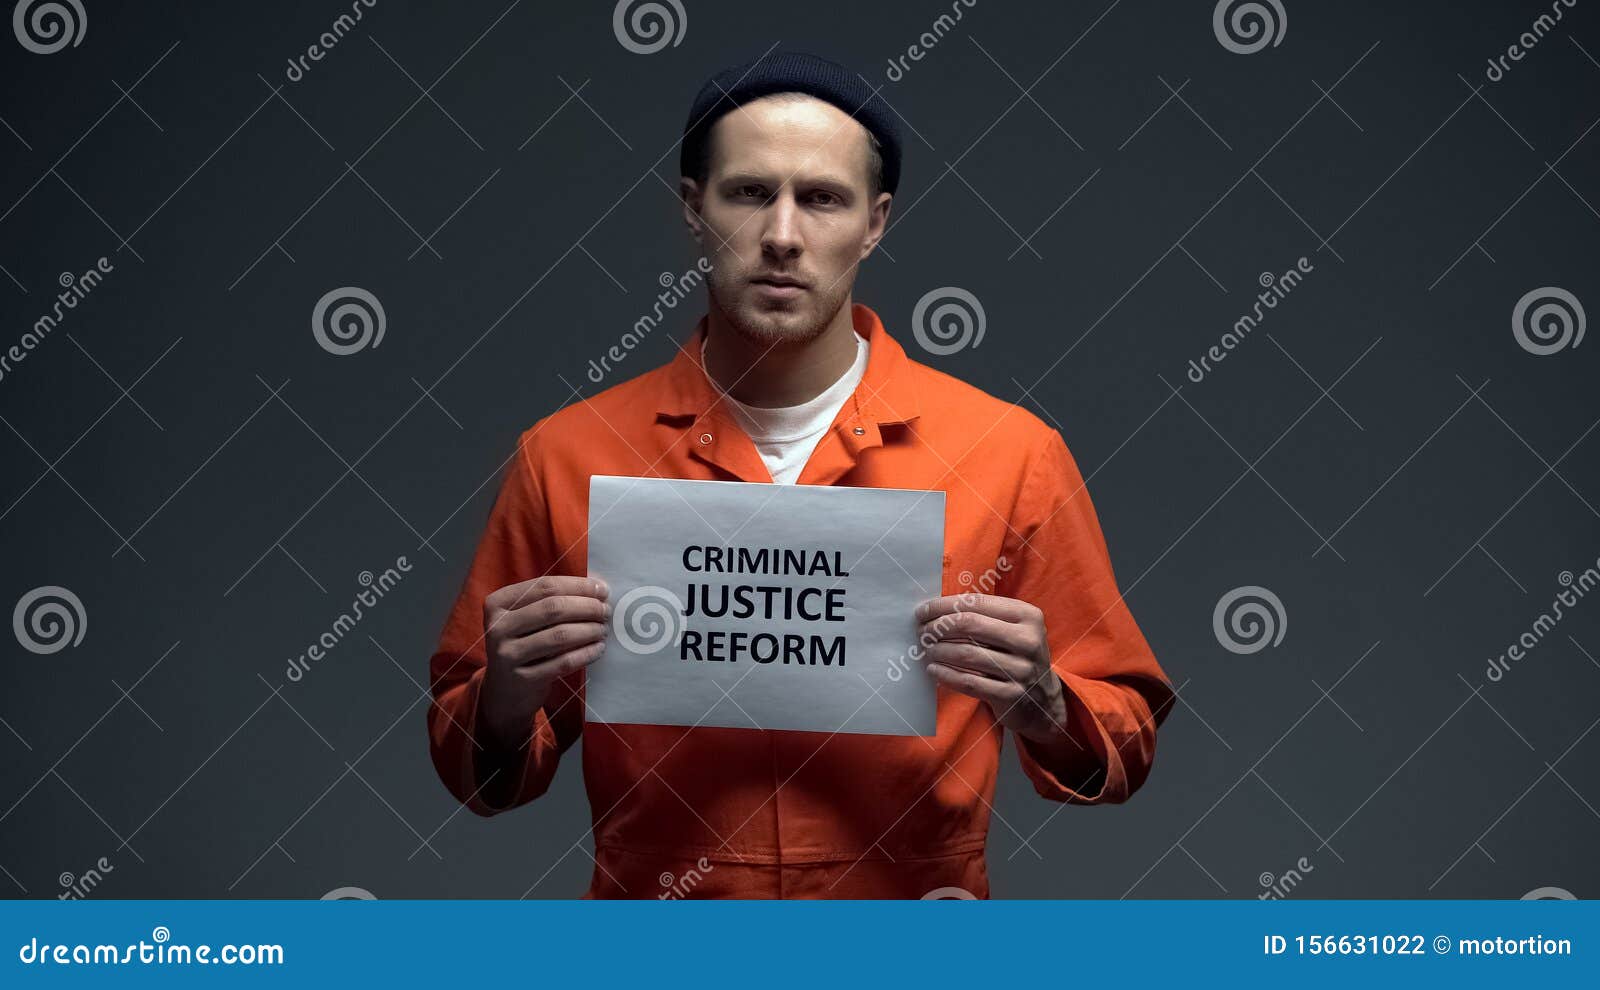 male prisoner holding criminal justice reform sign, human rights protection